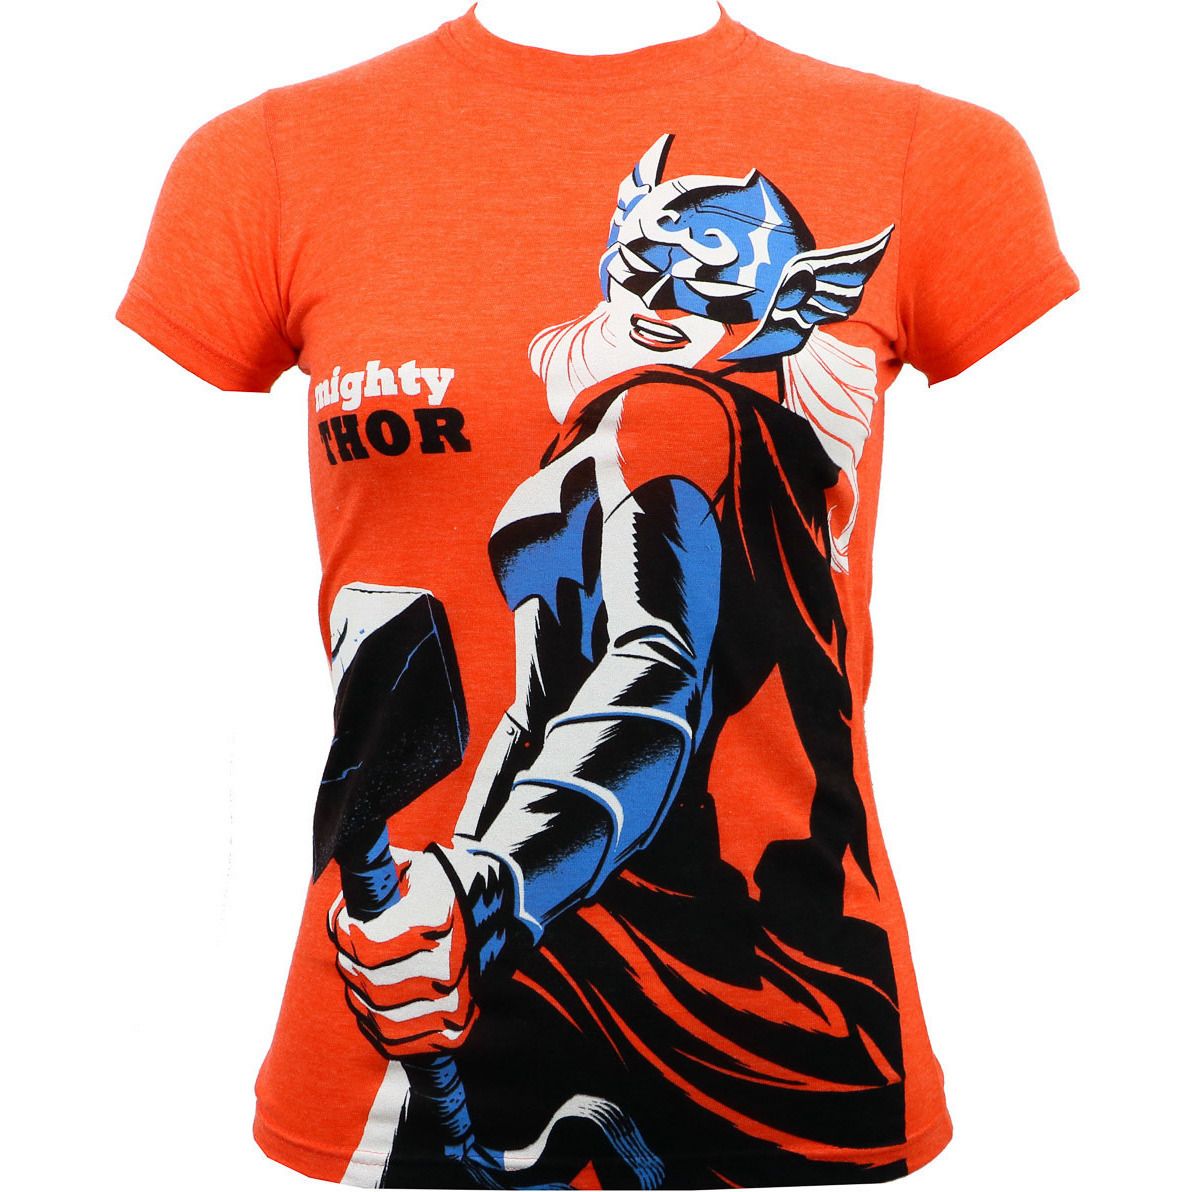  Mighty Thor Cho Variant Shirt Uncanny!